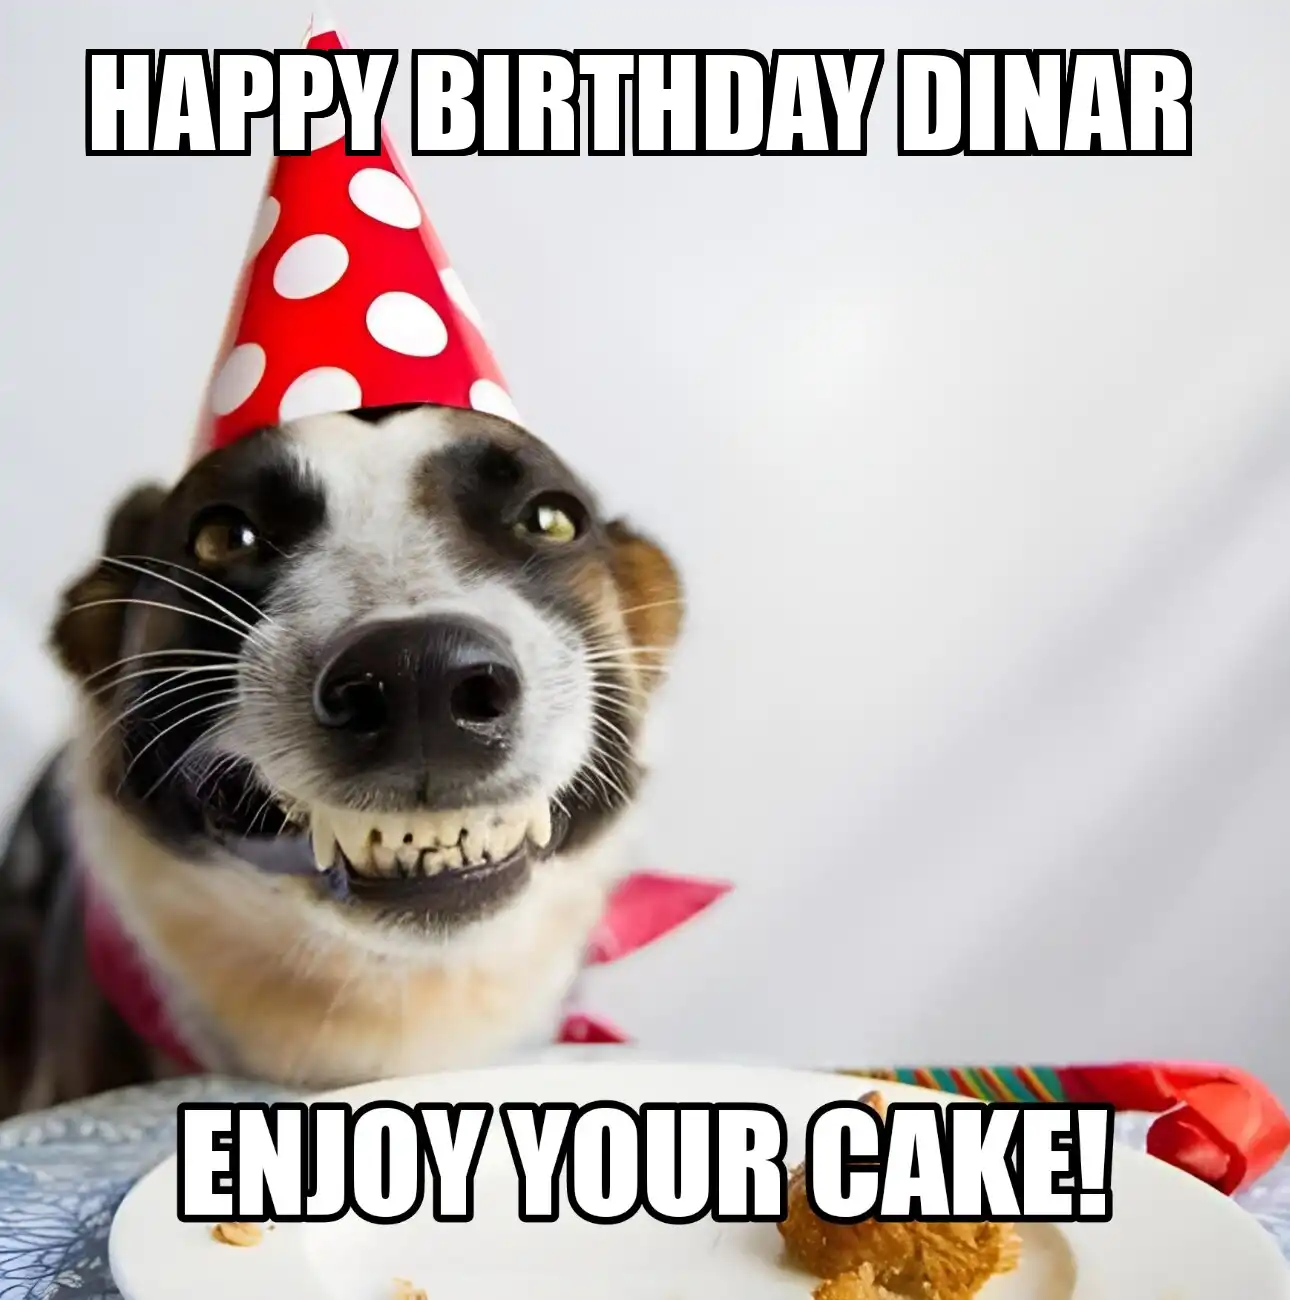 Happy Birthday Dinar Enjoy Your Cake Dog Meme